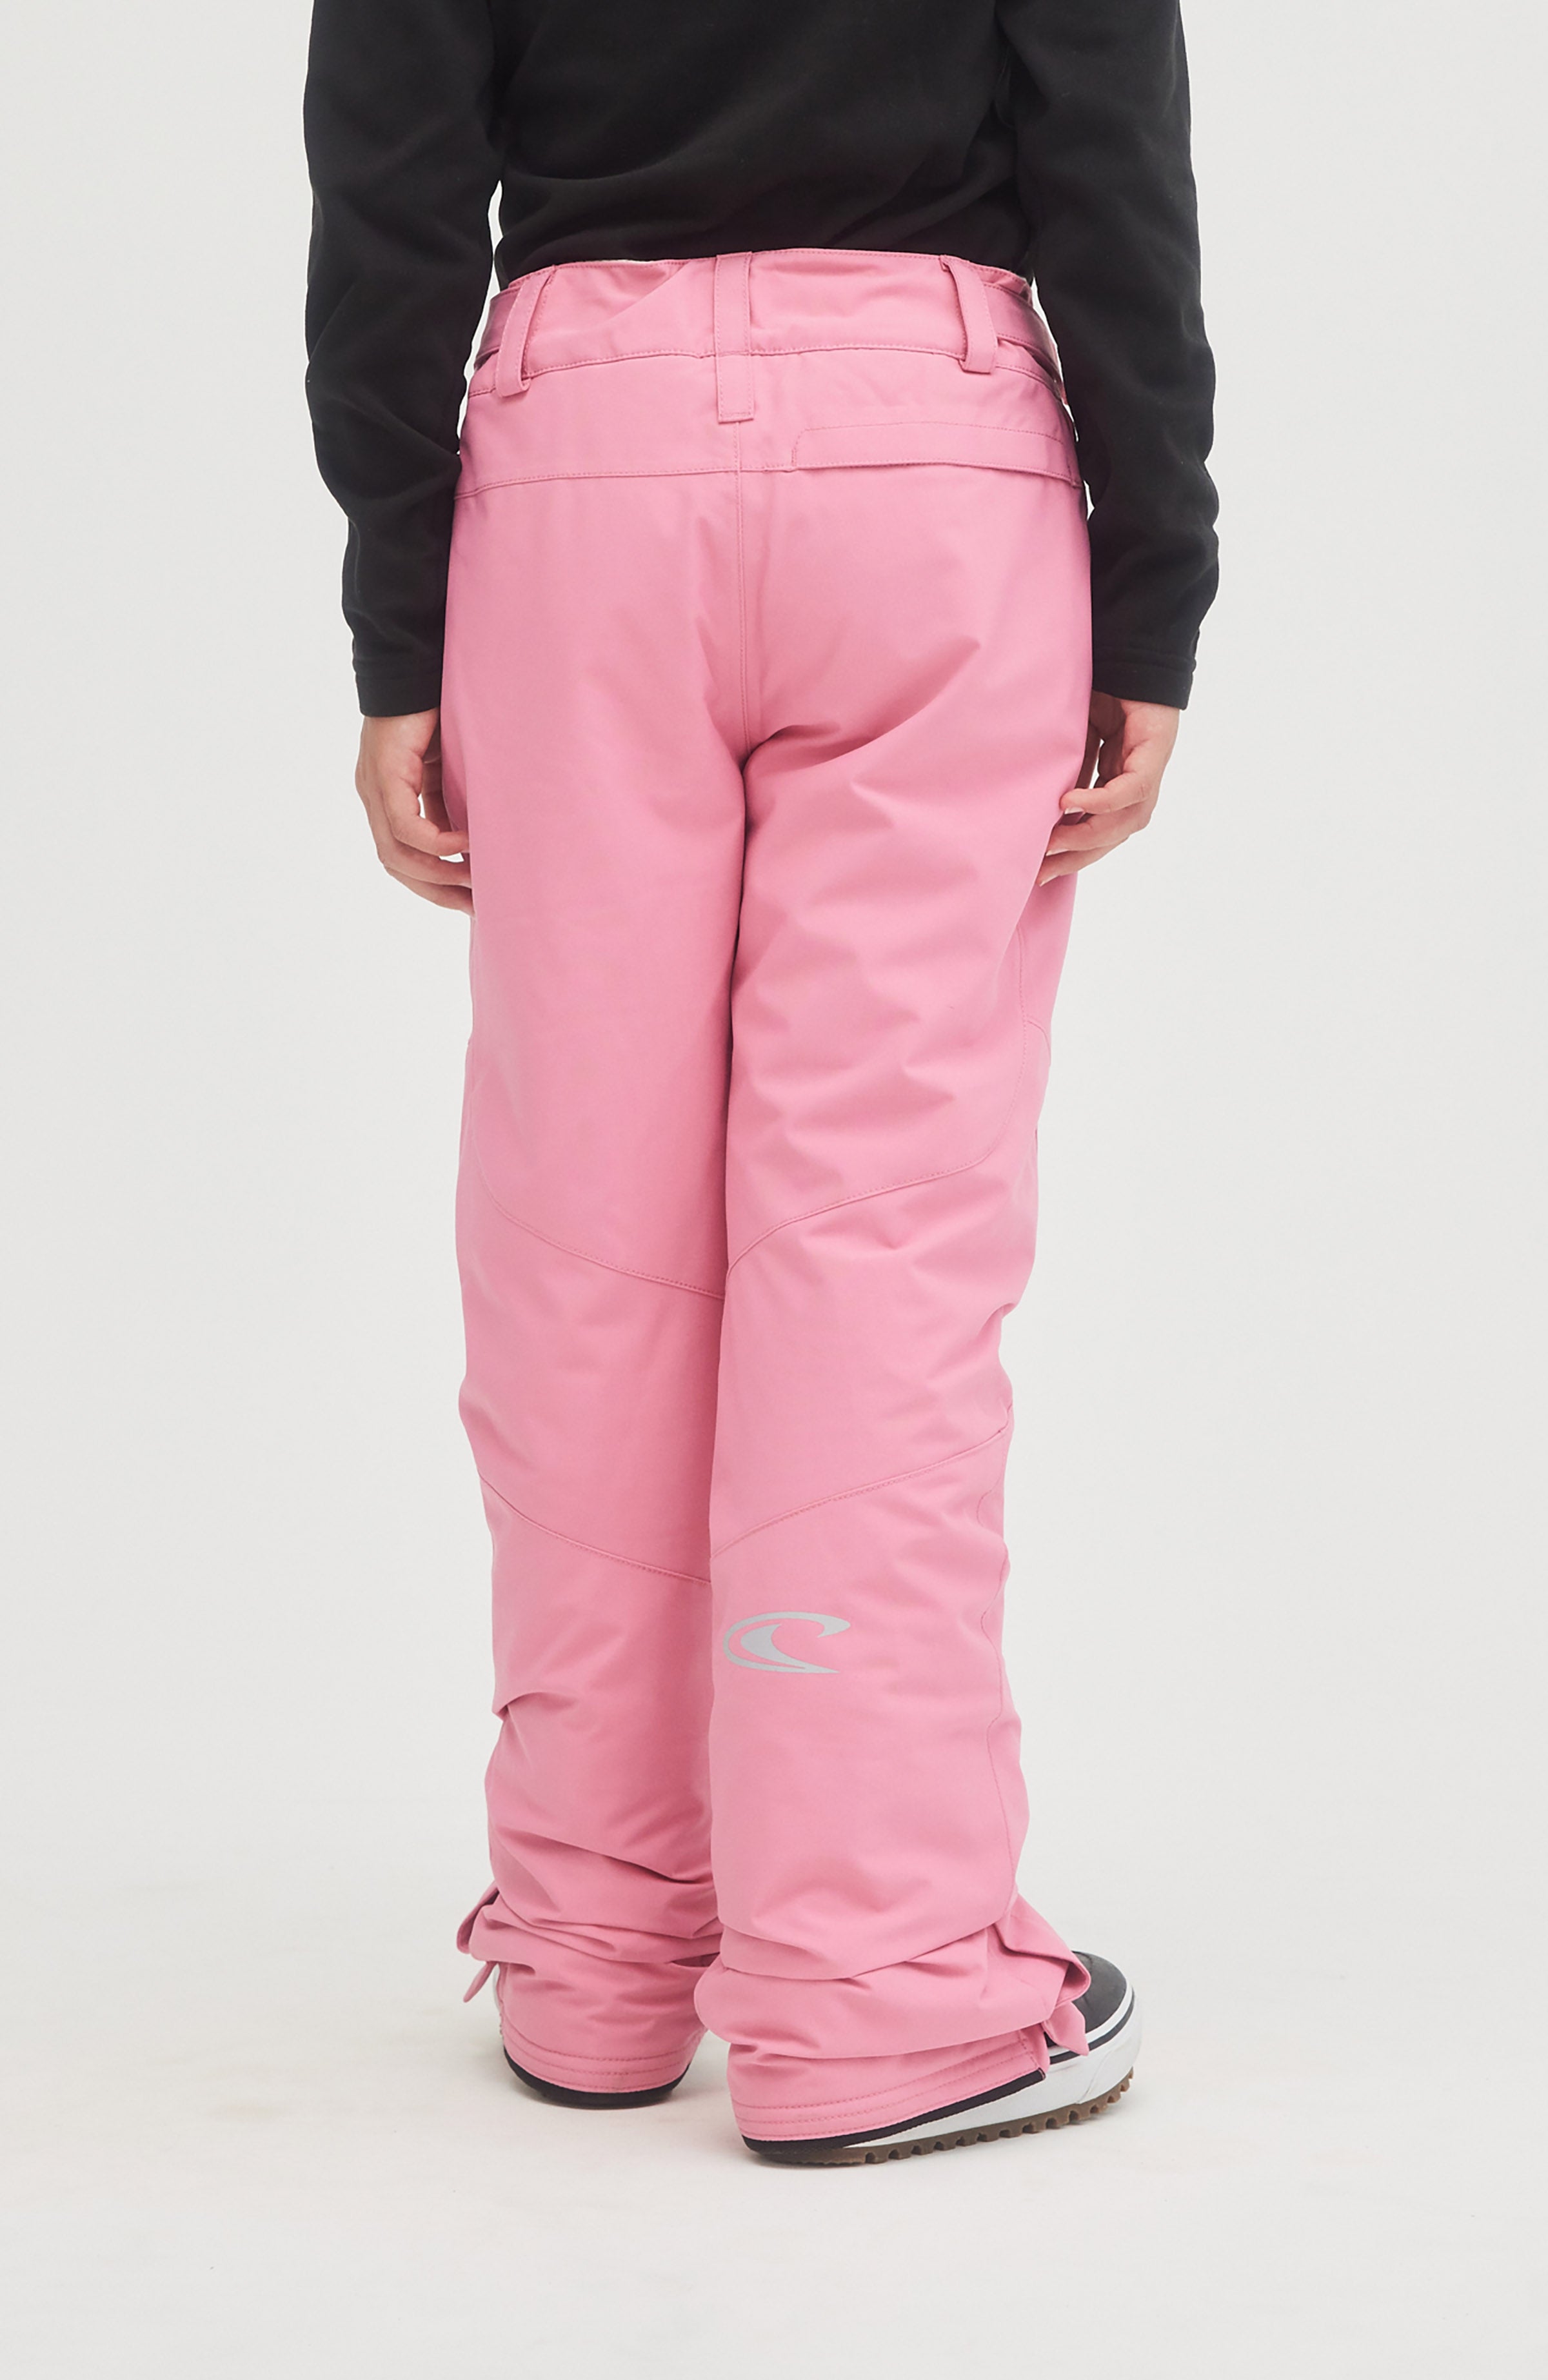 ONeill Charm PG Ski Pants Neon Tangerine Pink 8P80723350  Girls Ski  Pants  Purple Ski Pants at Little Skiers